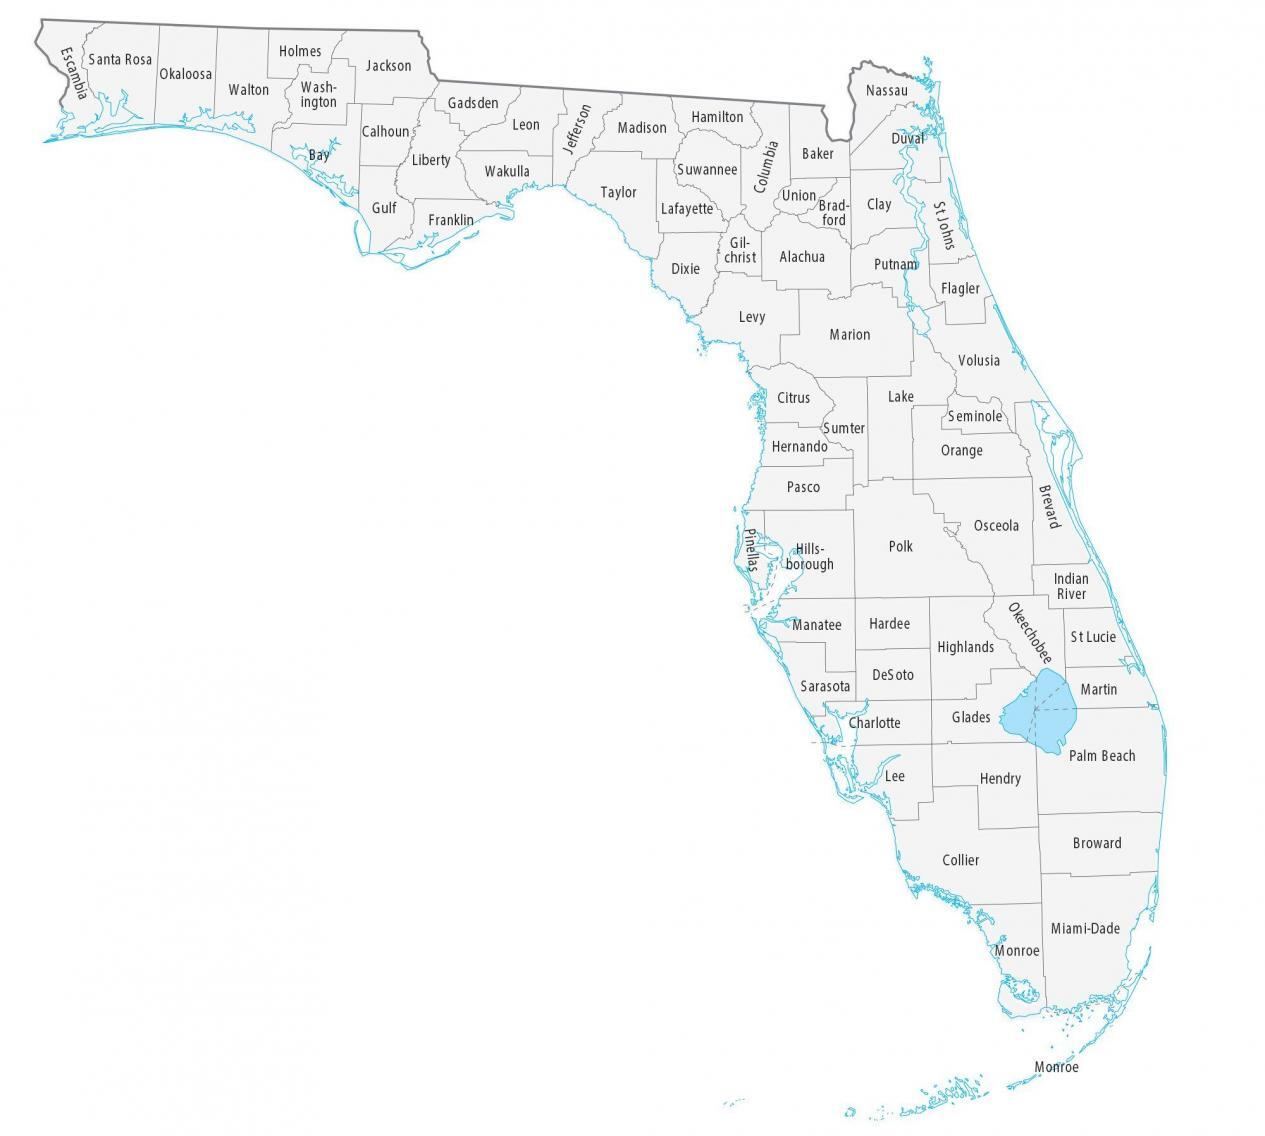 Network Cabling Company Florida